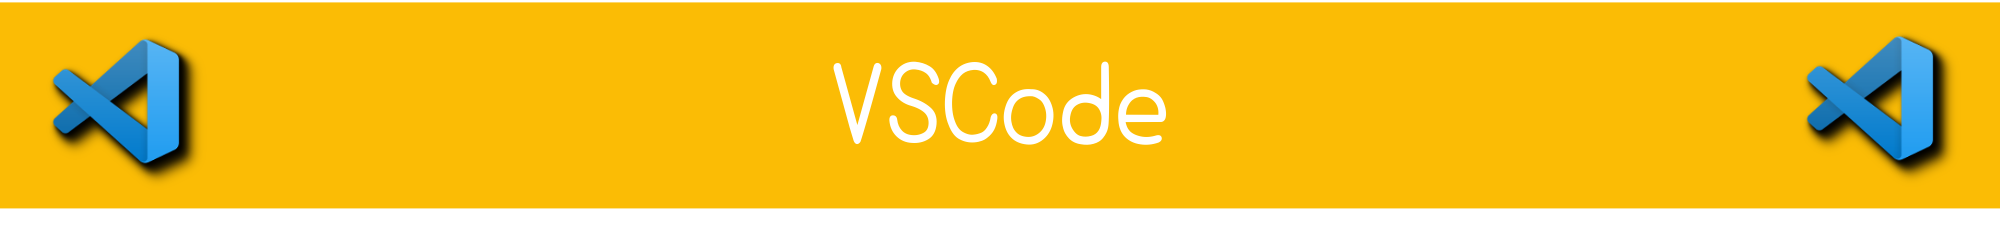 sec-vscode.png